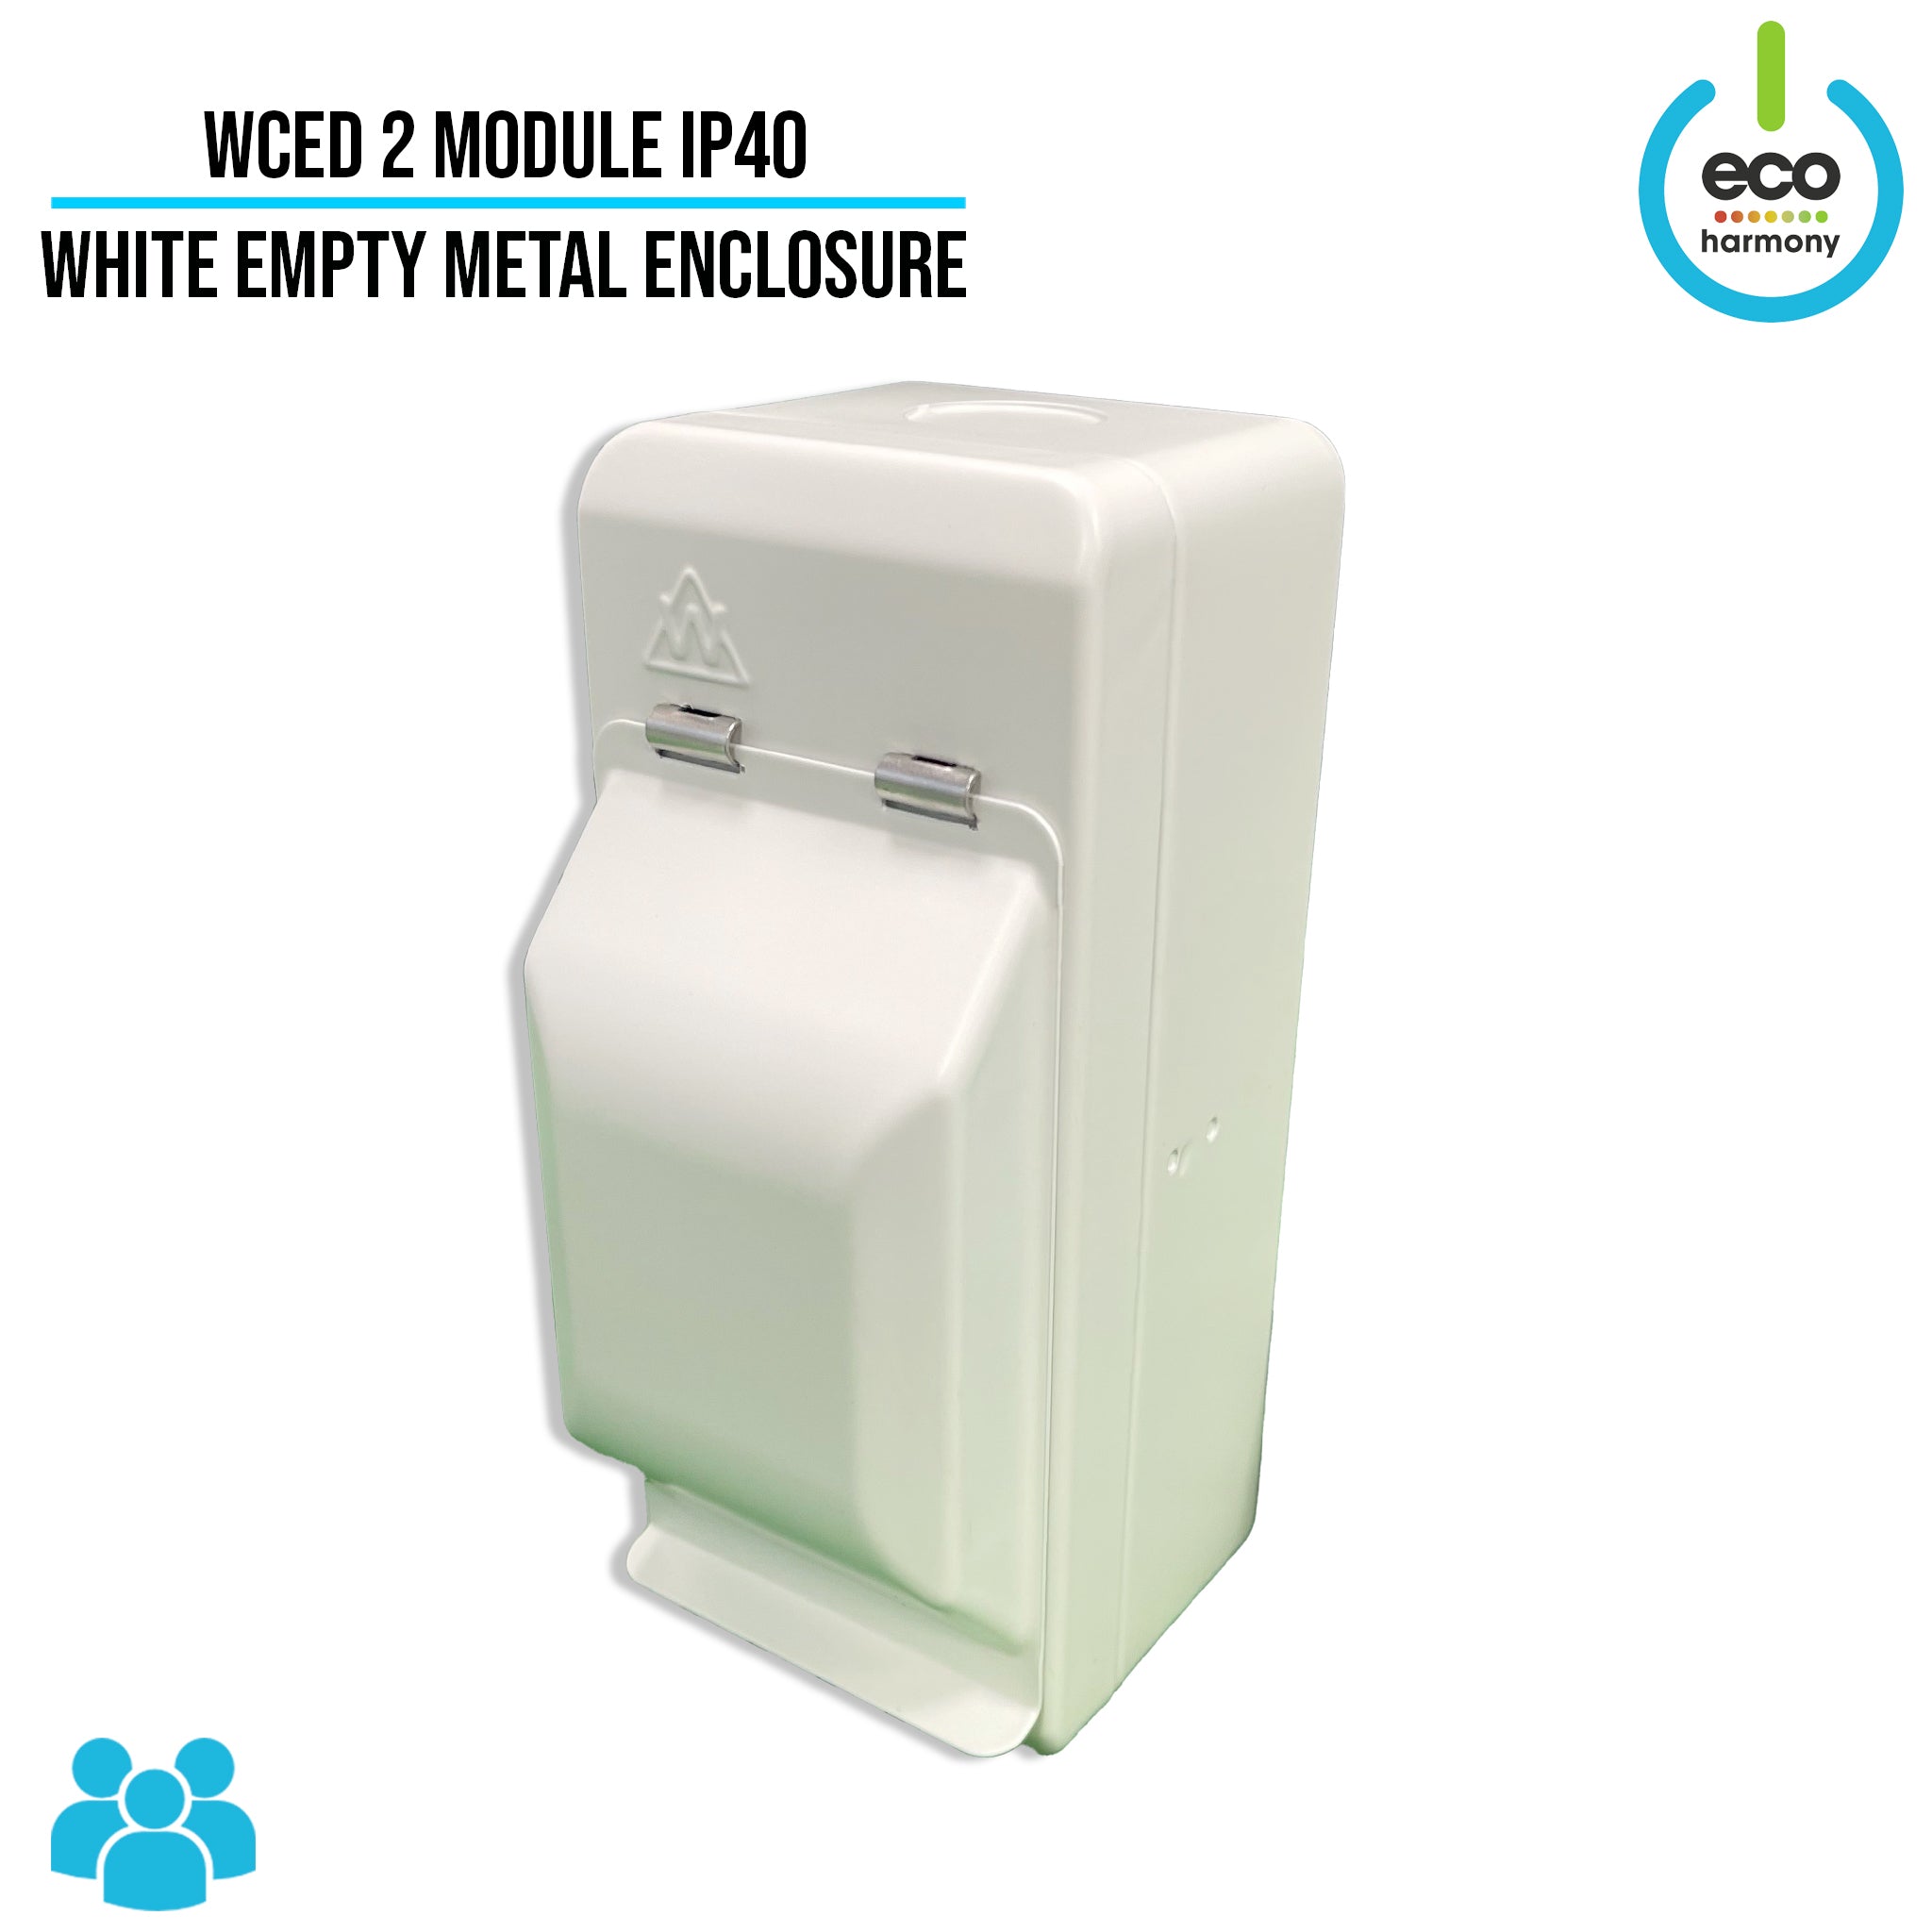 WCED 2 Module IP40 White Empty Metal Enclosure